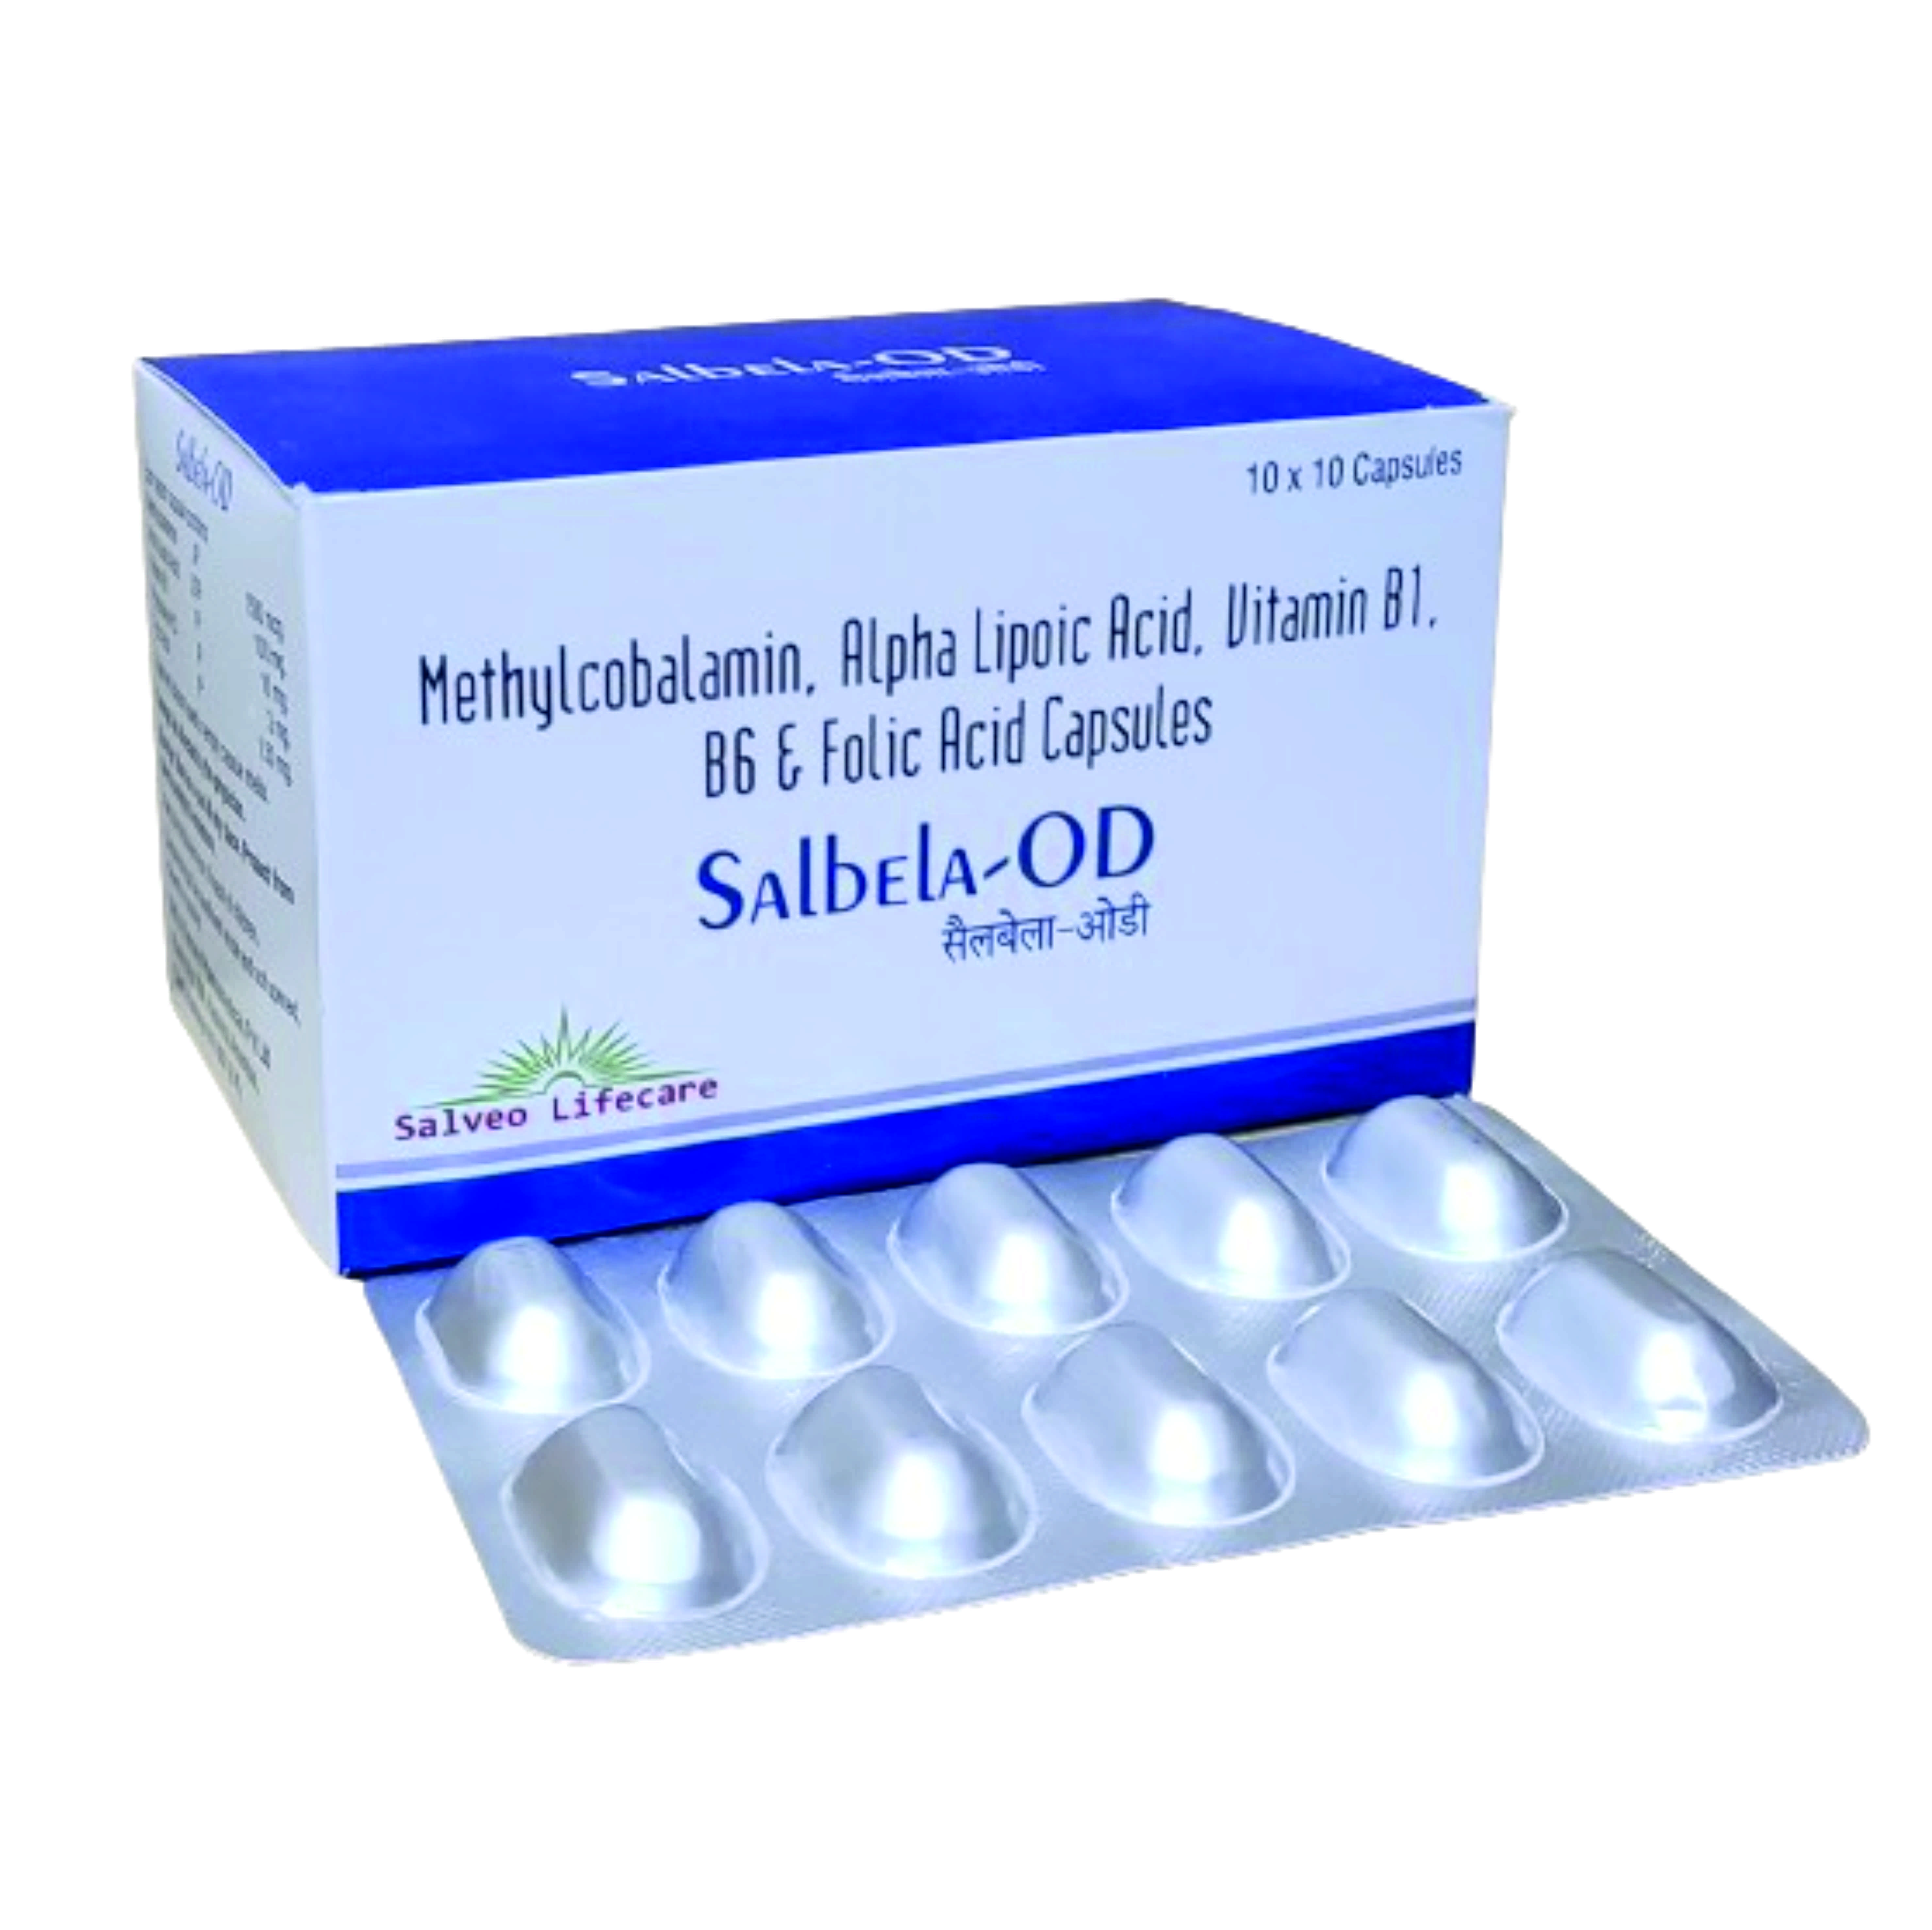 mecobalamin=1500mcg, ala=100mg, vit b1 10 mg,
vit b6 3 mg, folic acid 1.50 mg